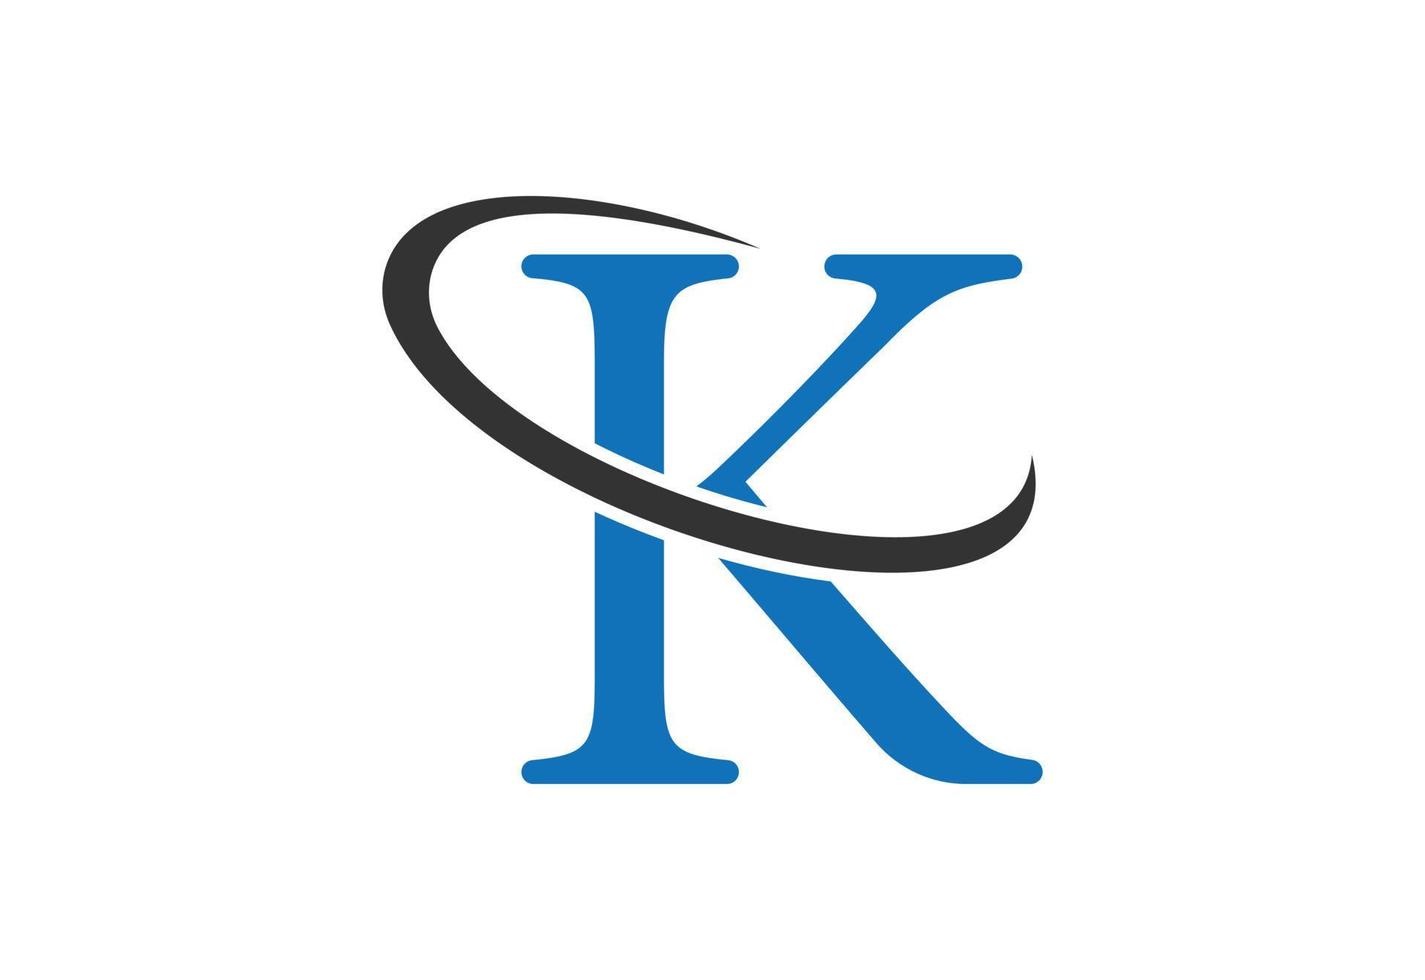 carta k logotipo Projeto modelo, vetor ilustração